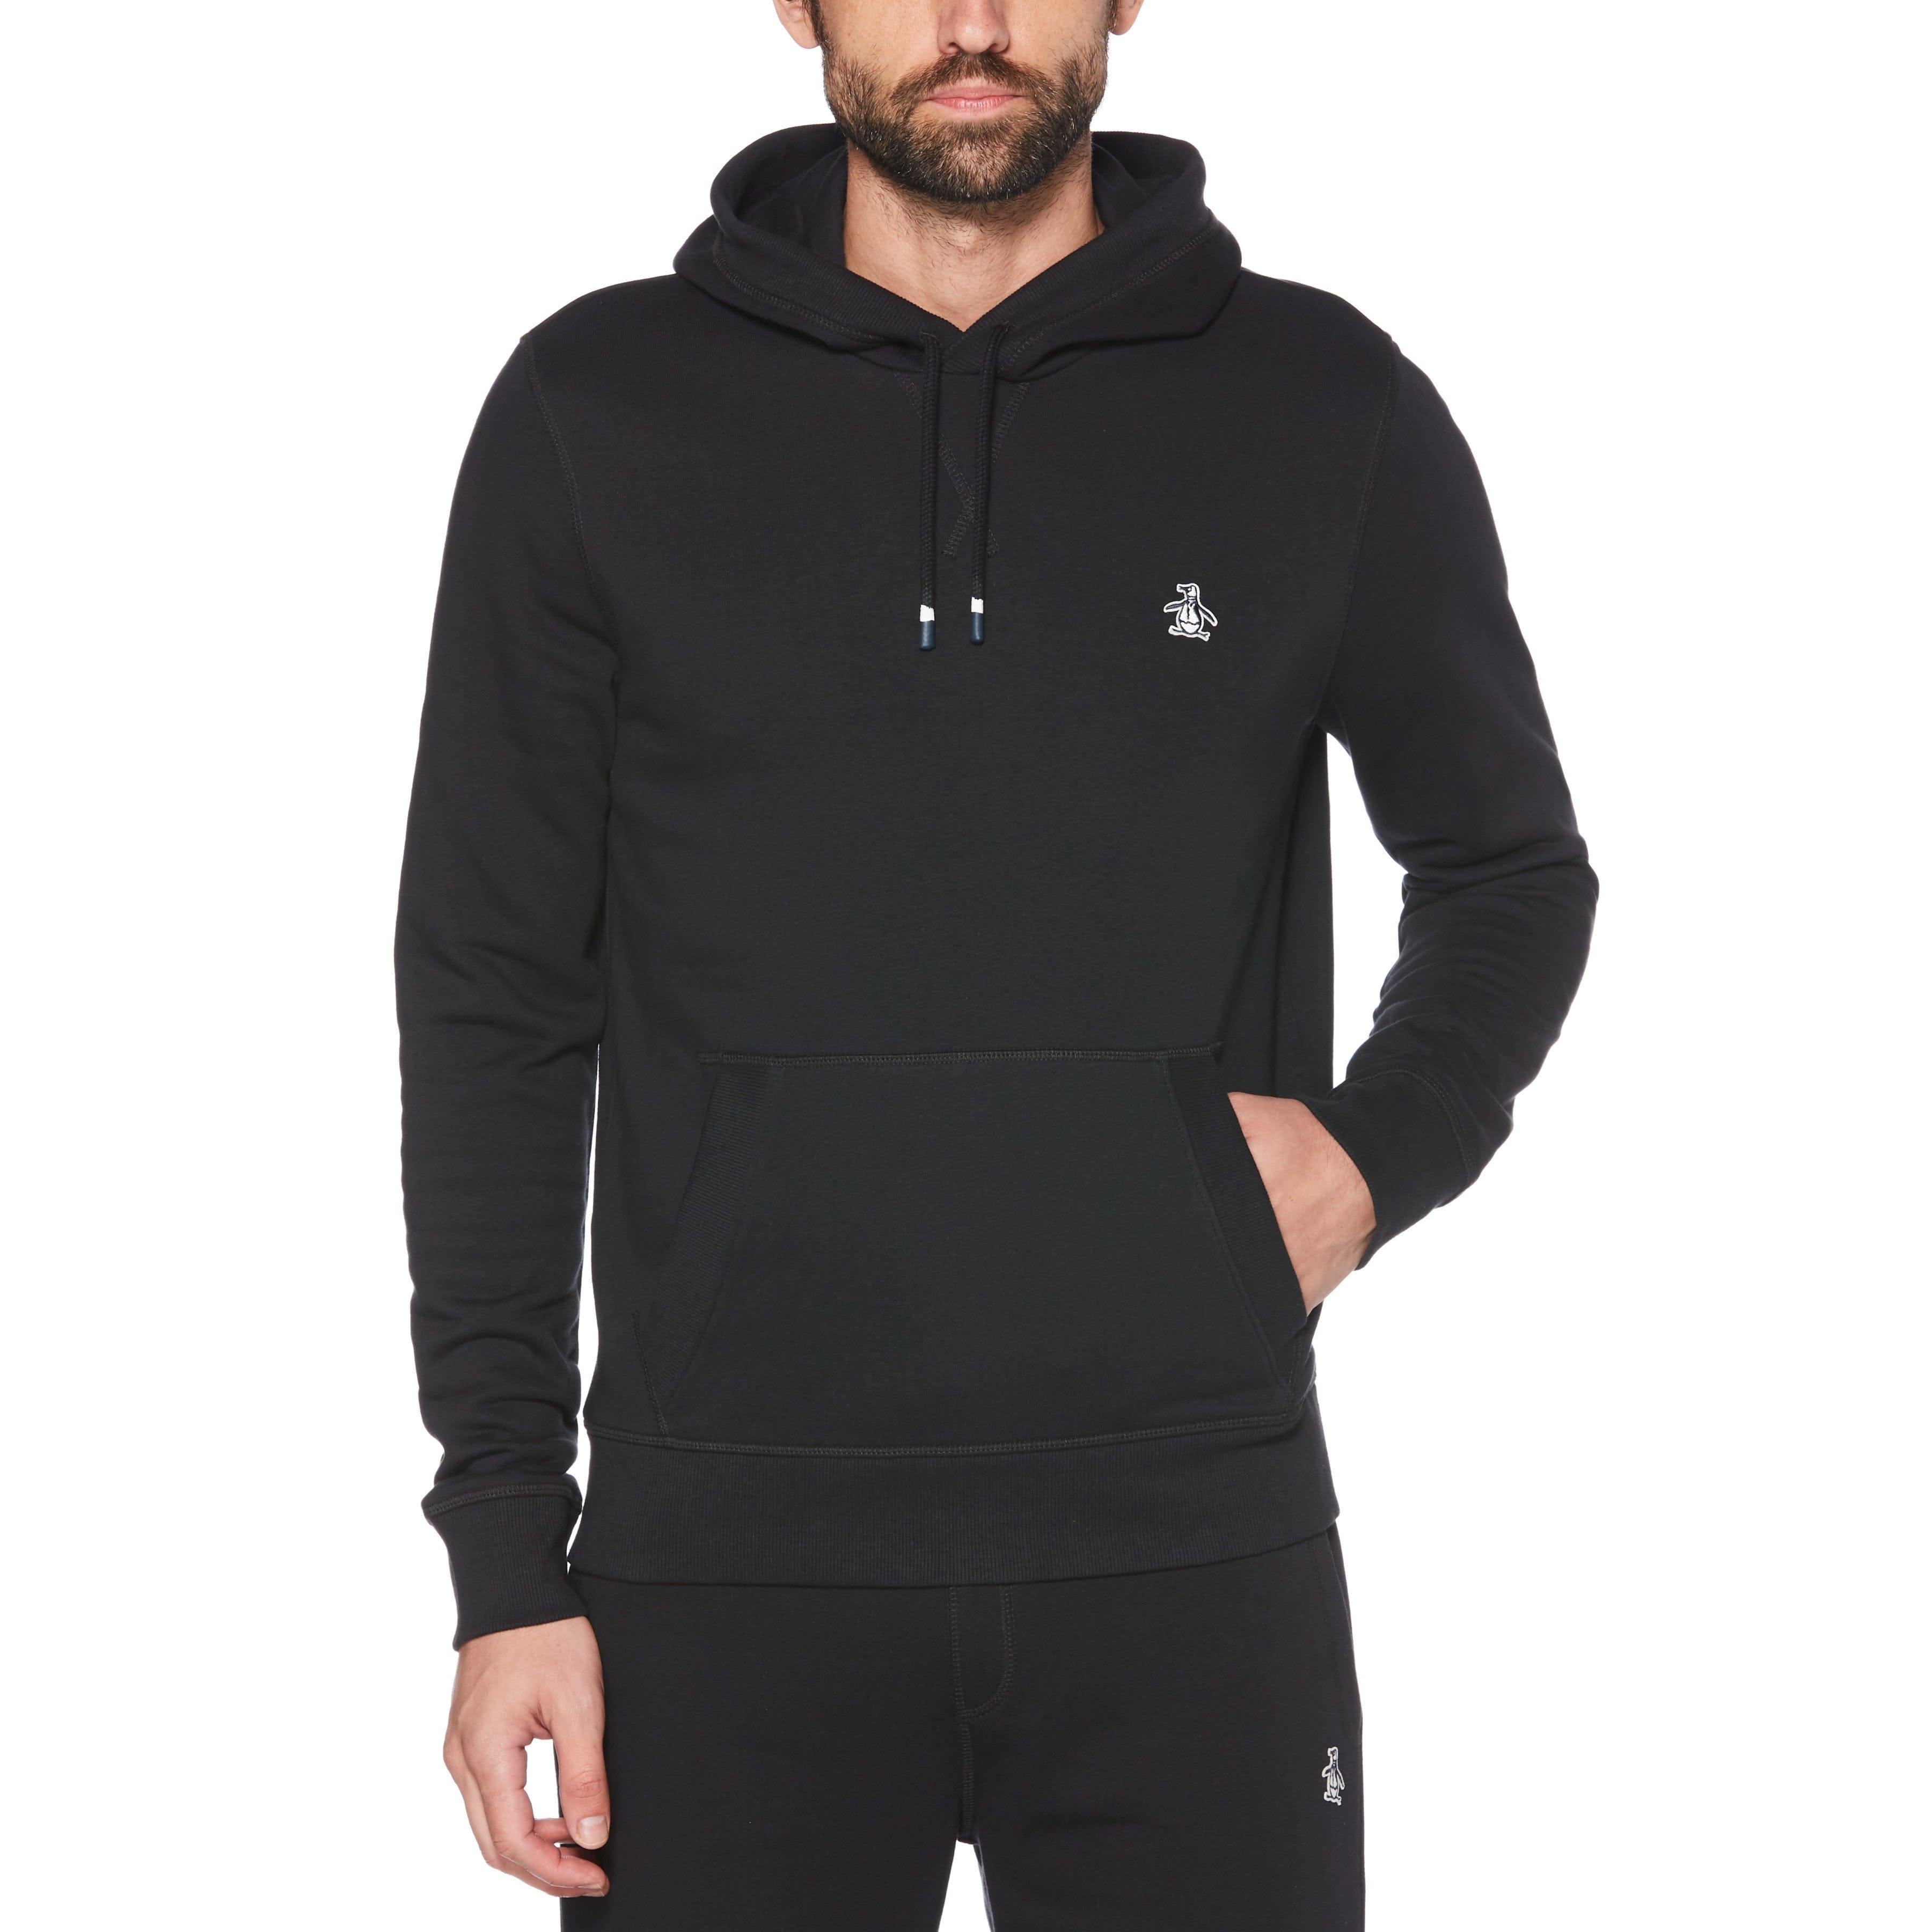 Pepega Black Logo Designs' Men's Premium Sweatshirt